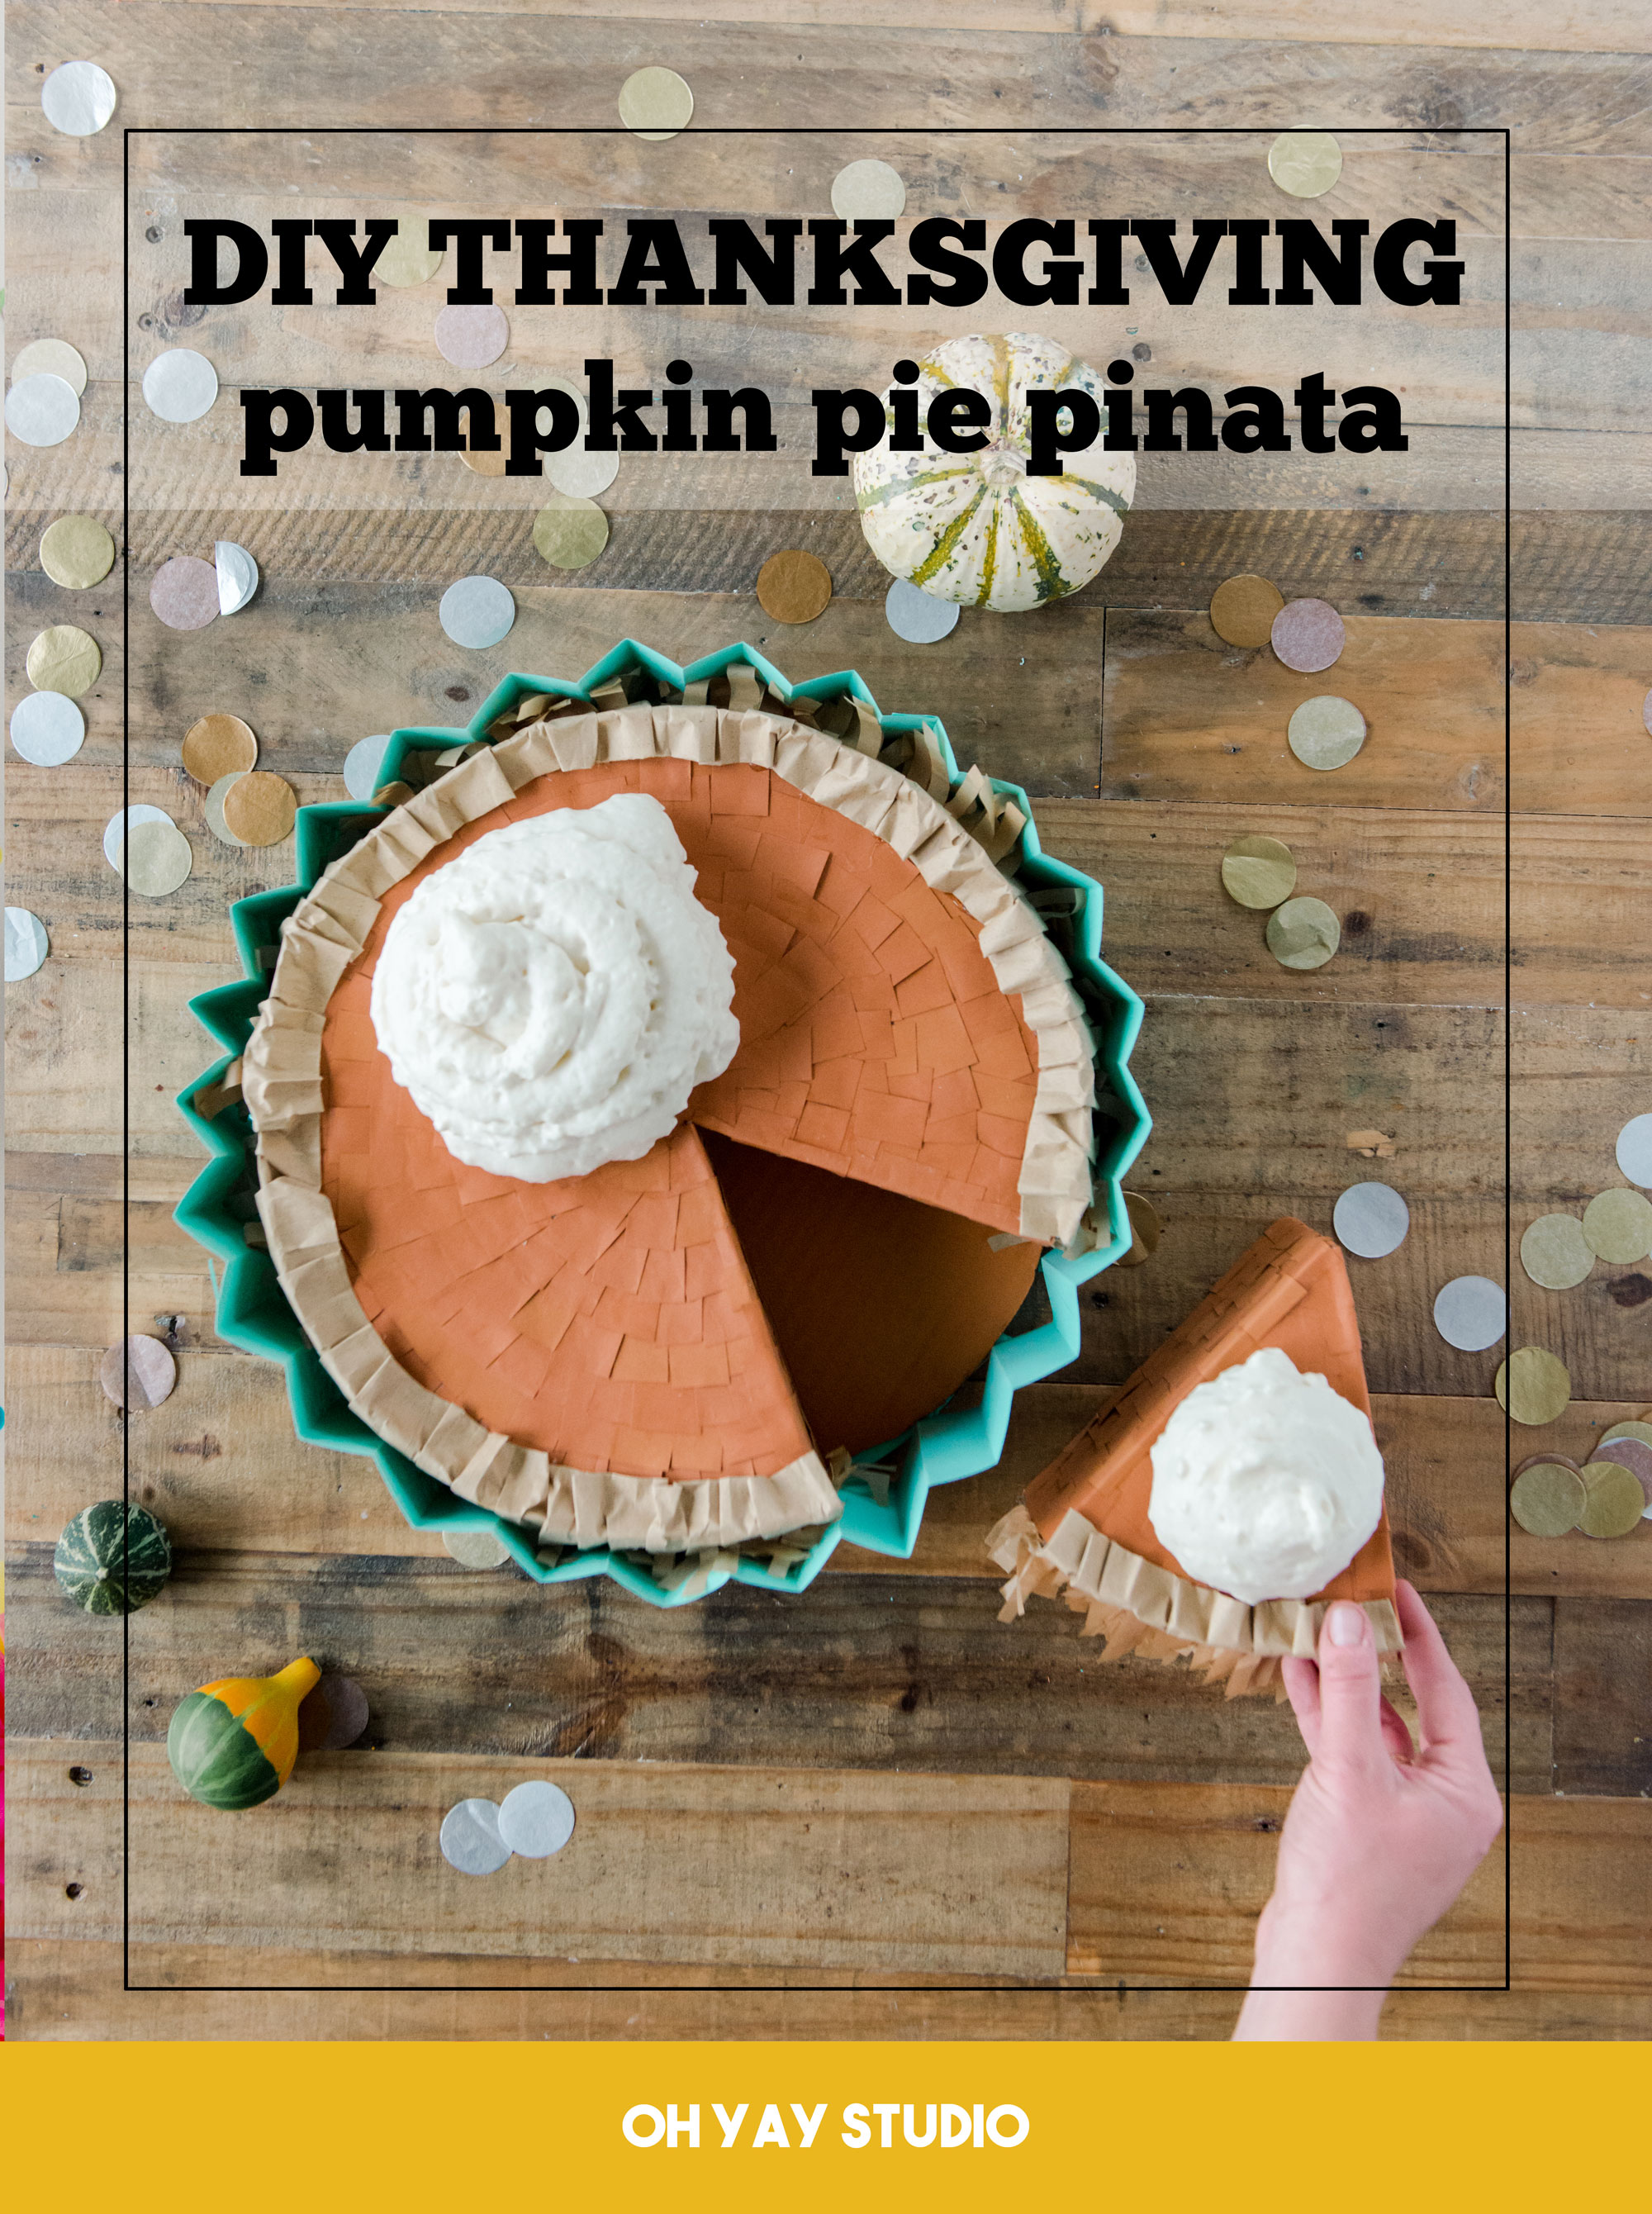 Pumpkin pie pinata, How to make a pumpkin pie pinata, Thanksgiving pinata, Thanksgiving party ideas, Friendsgiving pinata, Thanksgiving pie, Friendsgiving pie ideas, how to make a pinata, Pinata pie DIY